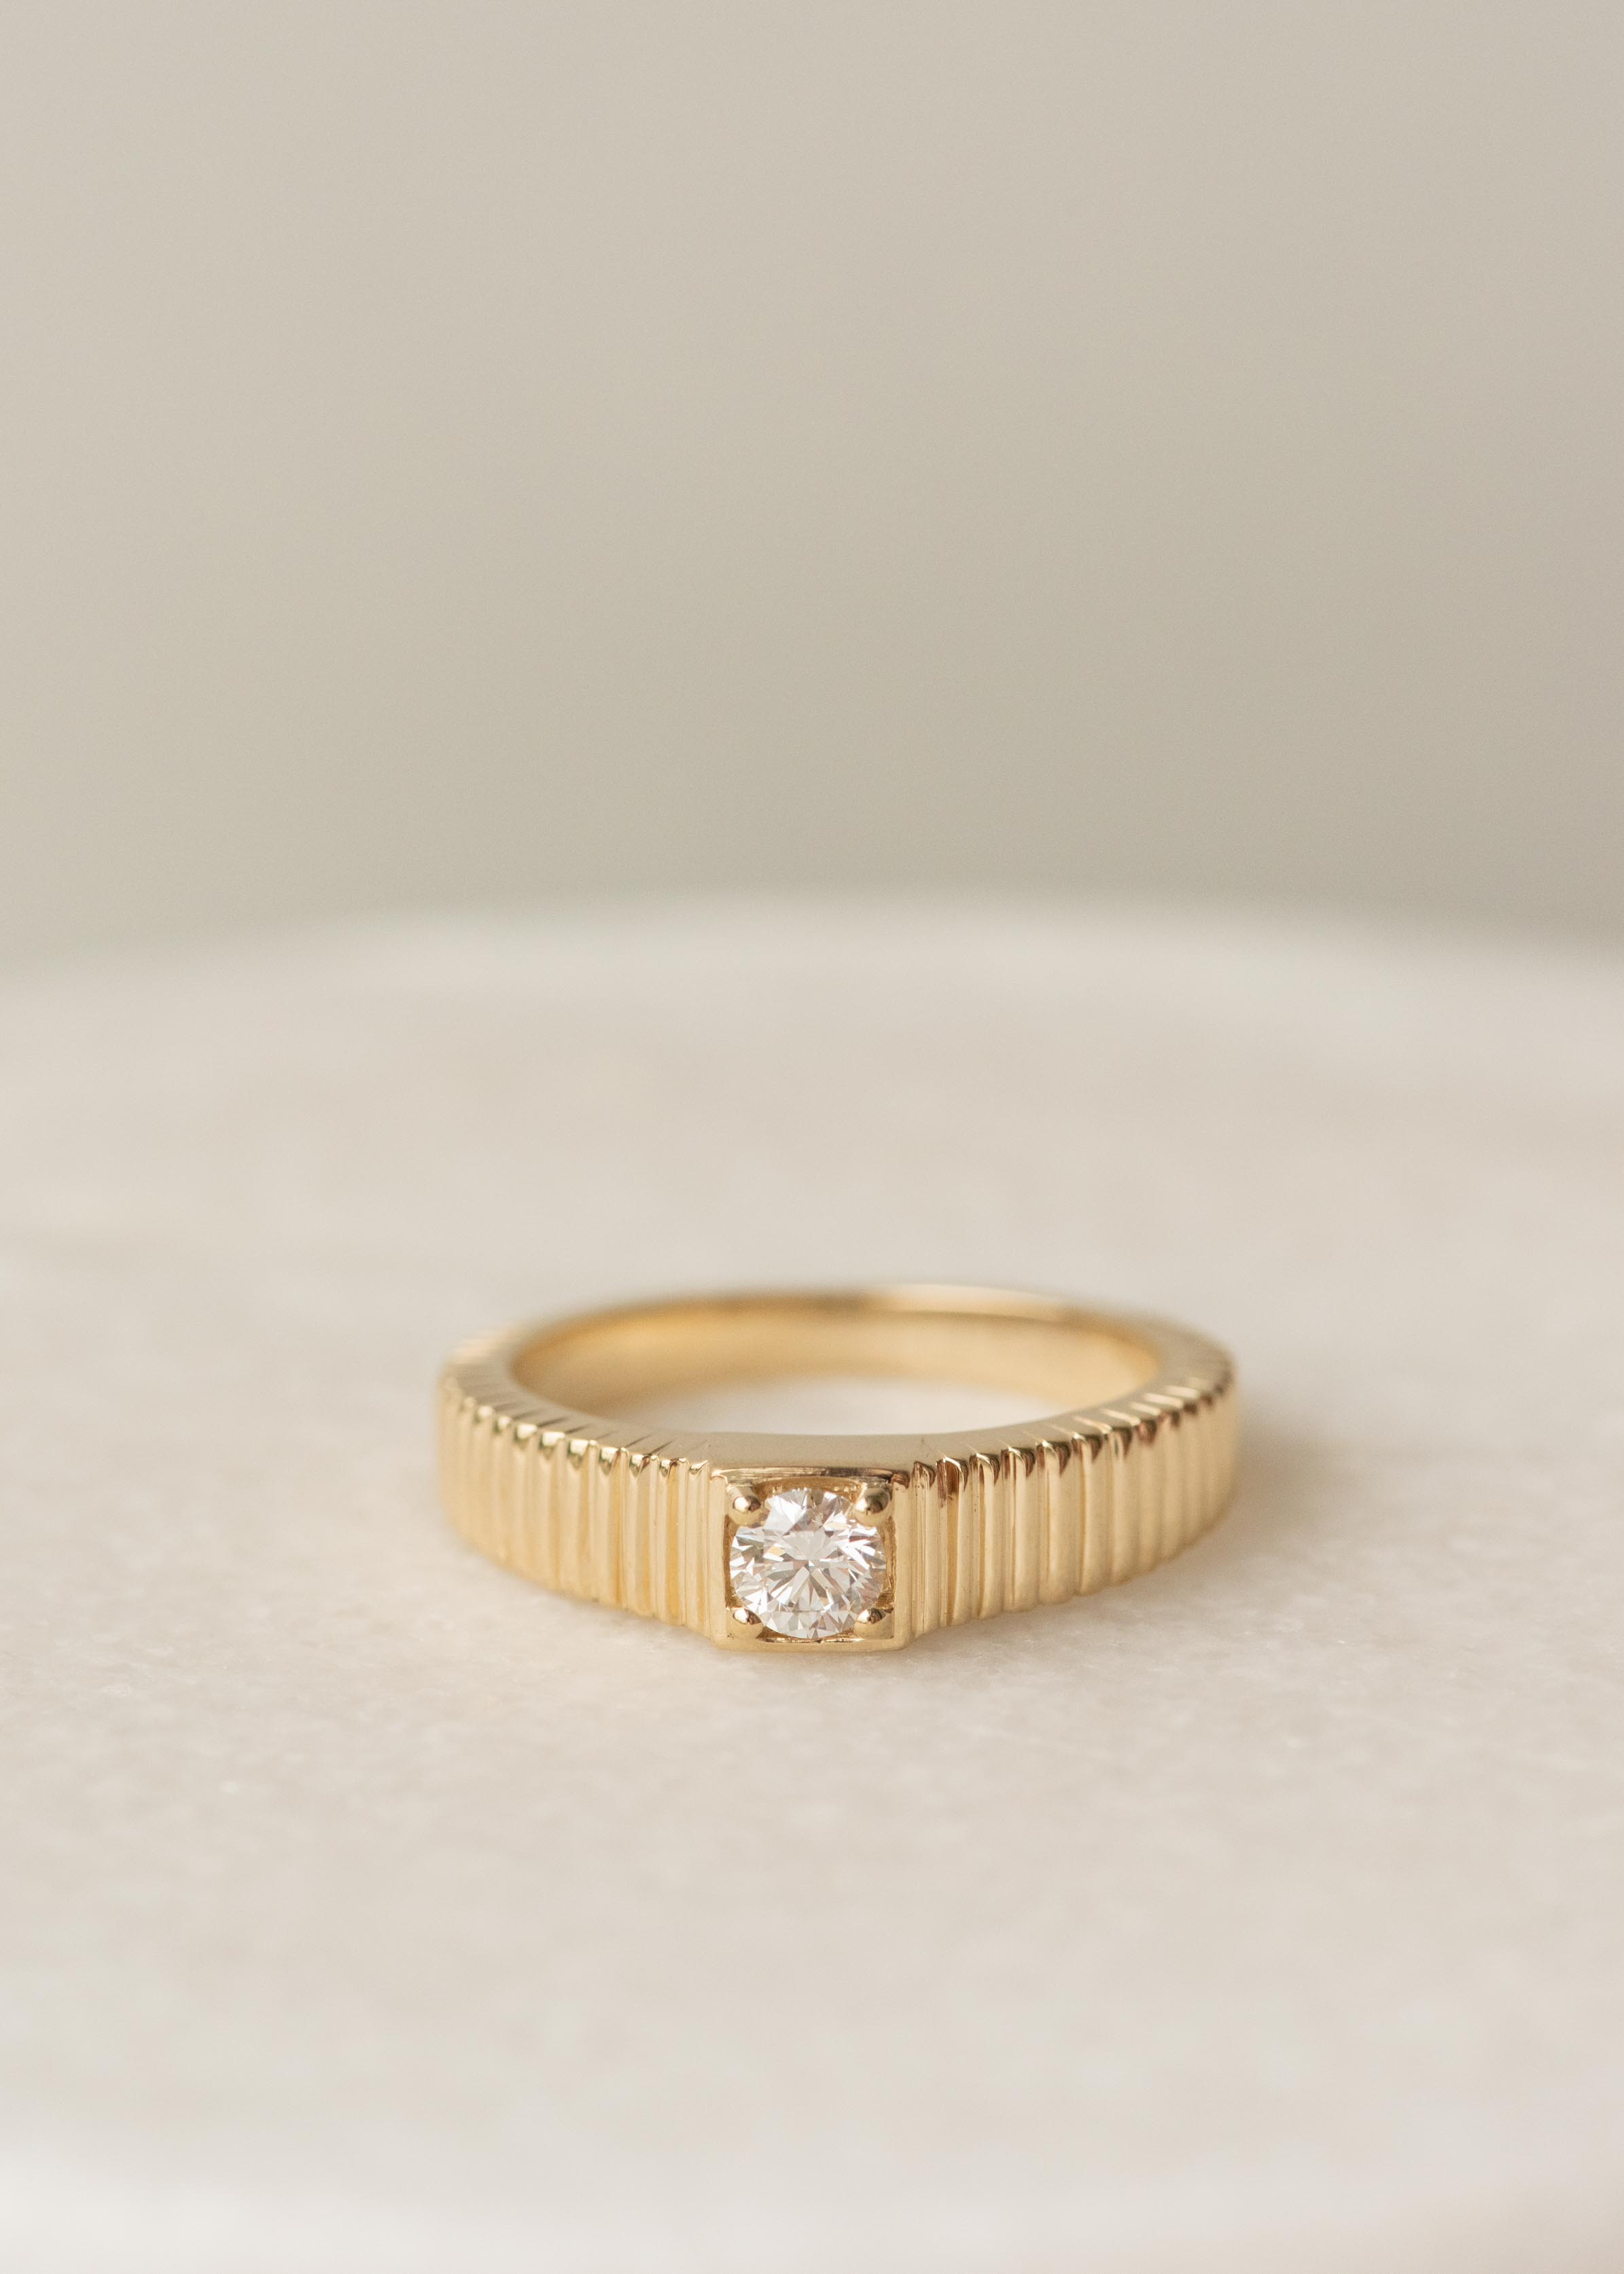 Dean & Dust Jewellery Store - Whangarei - Northland - Jewellery Design - Bespoke Design - Fluted Diamond Ring